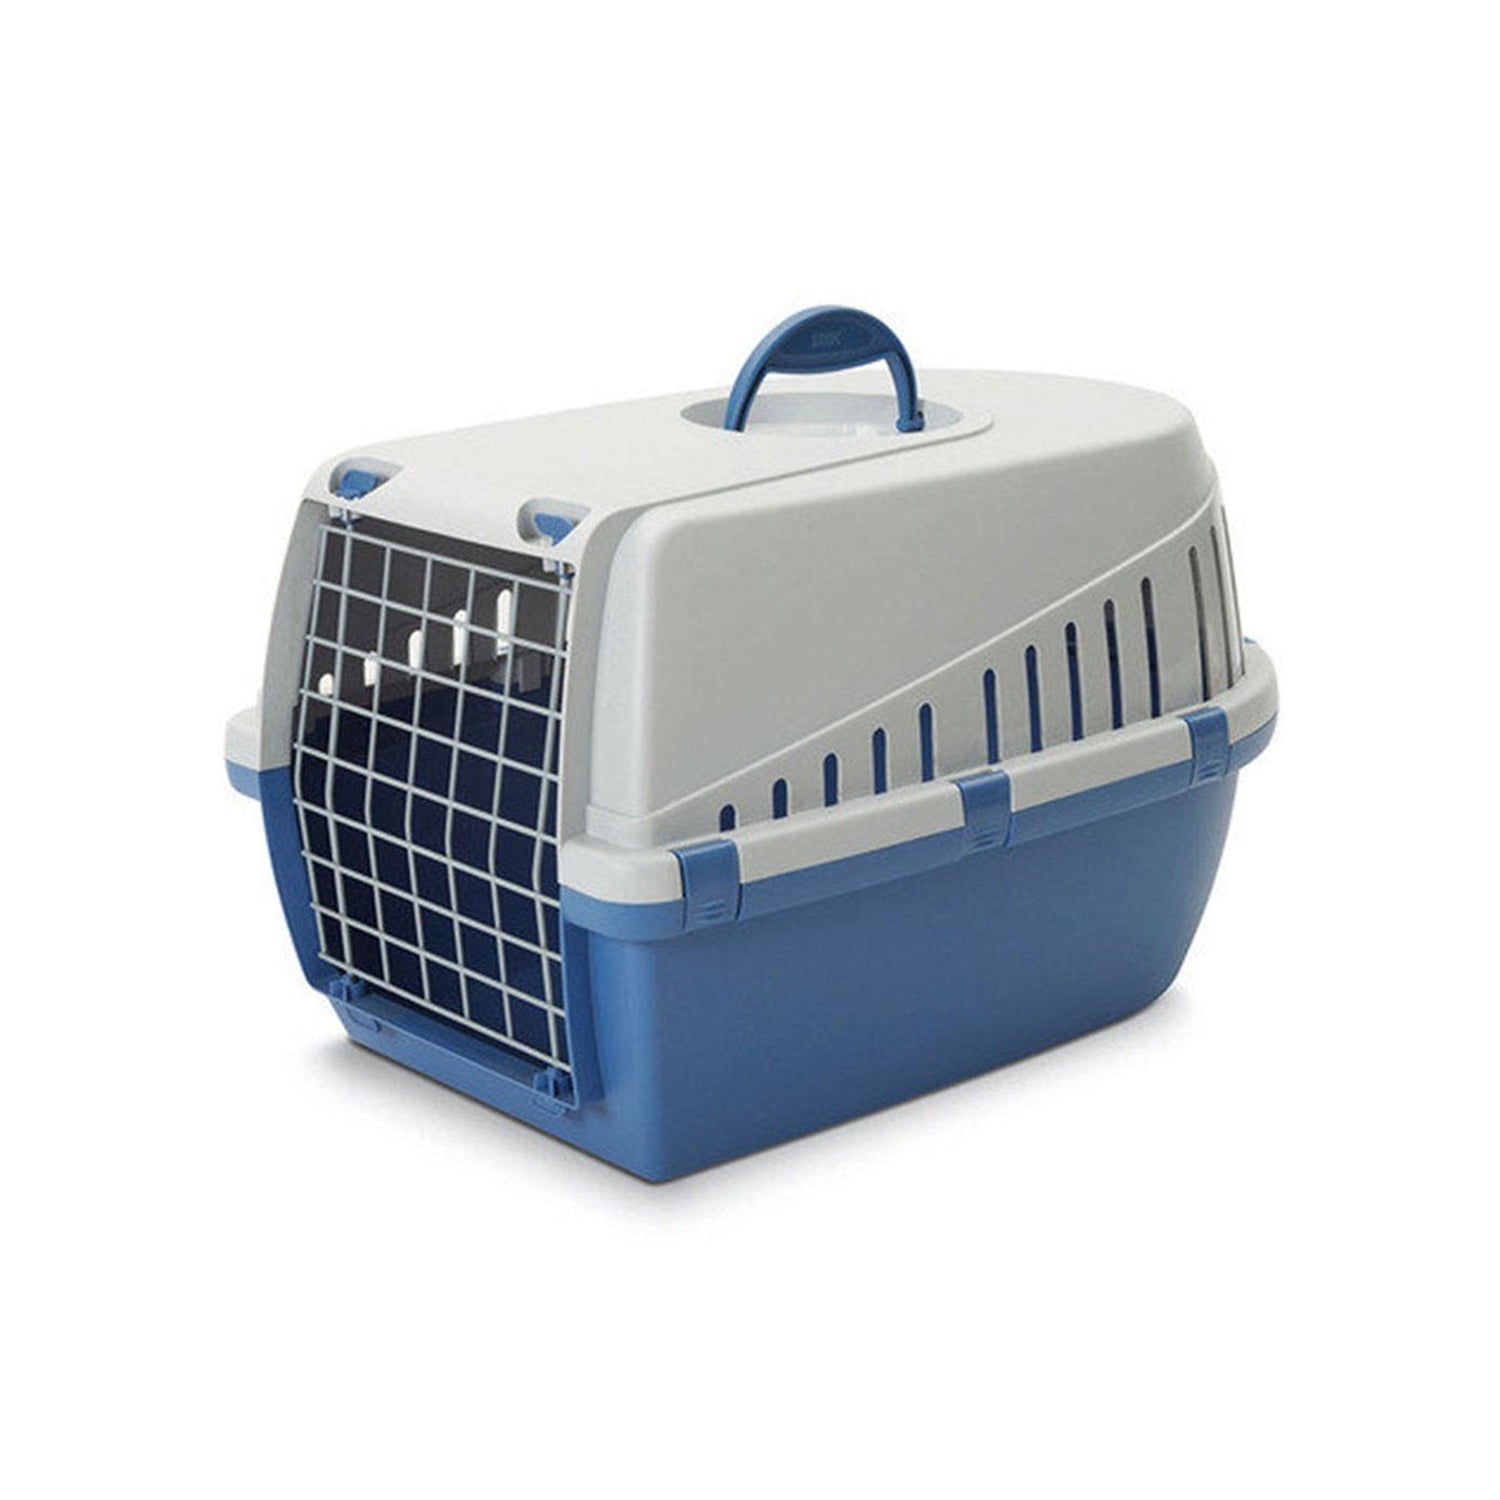 Poultry Pet Carrier Portable Transport Bag - Large - My Favorite Chicken